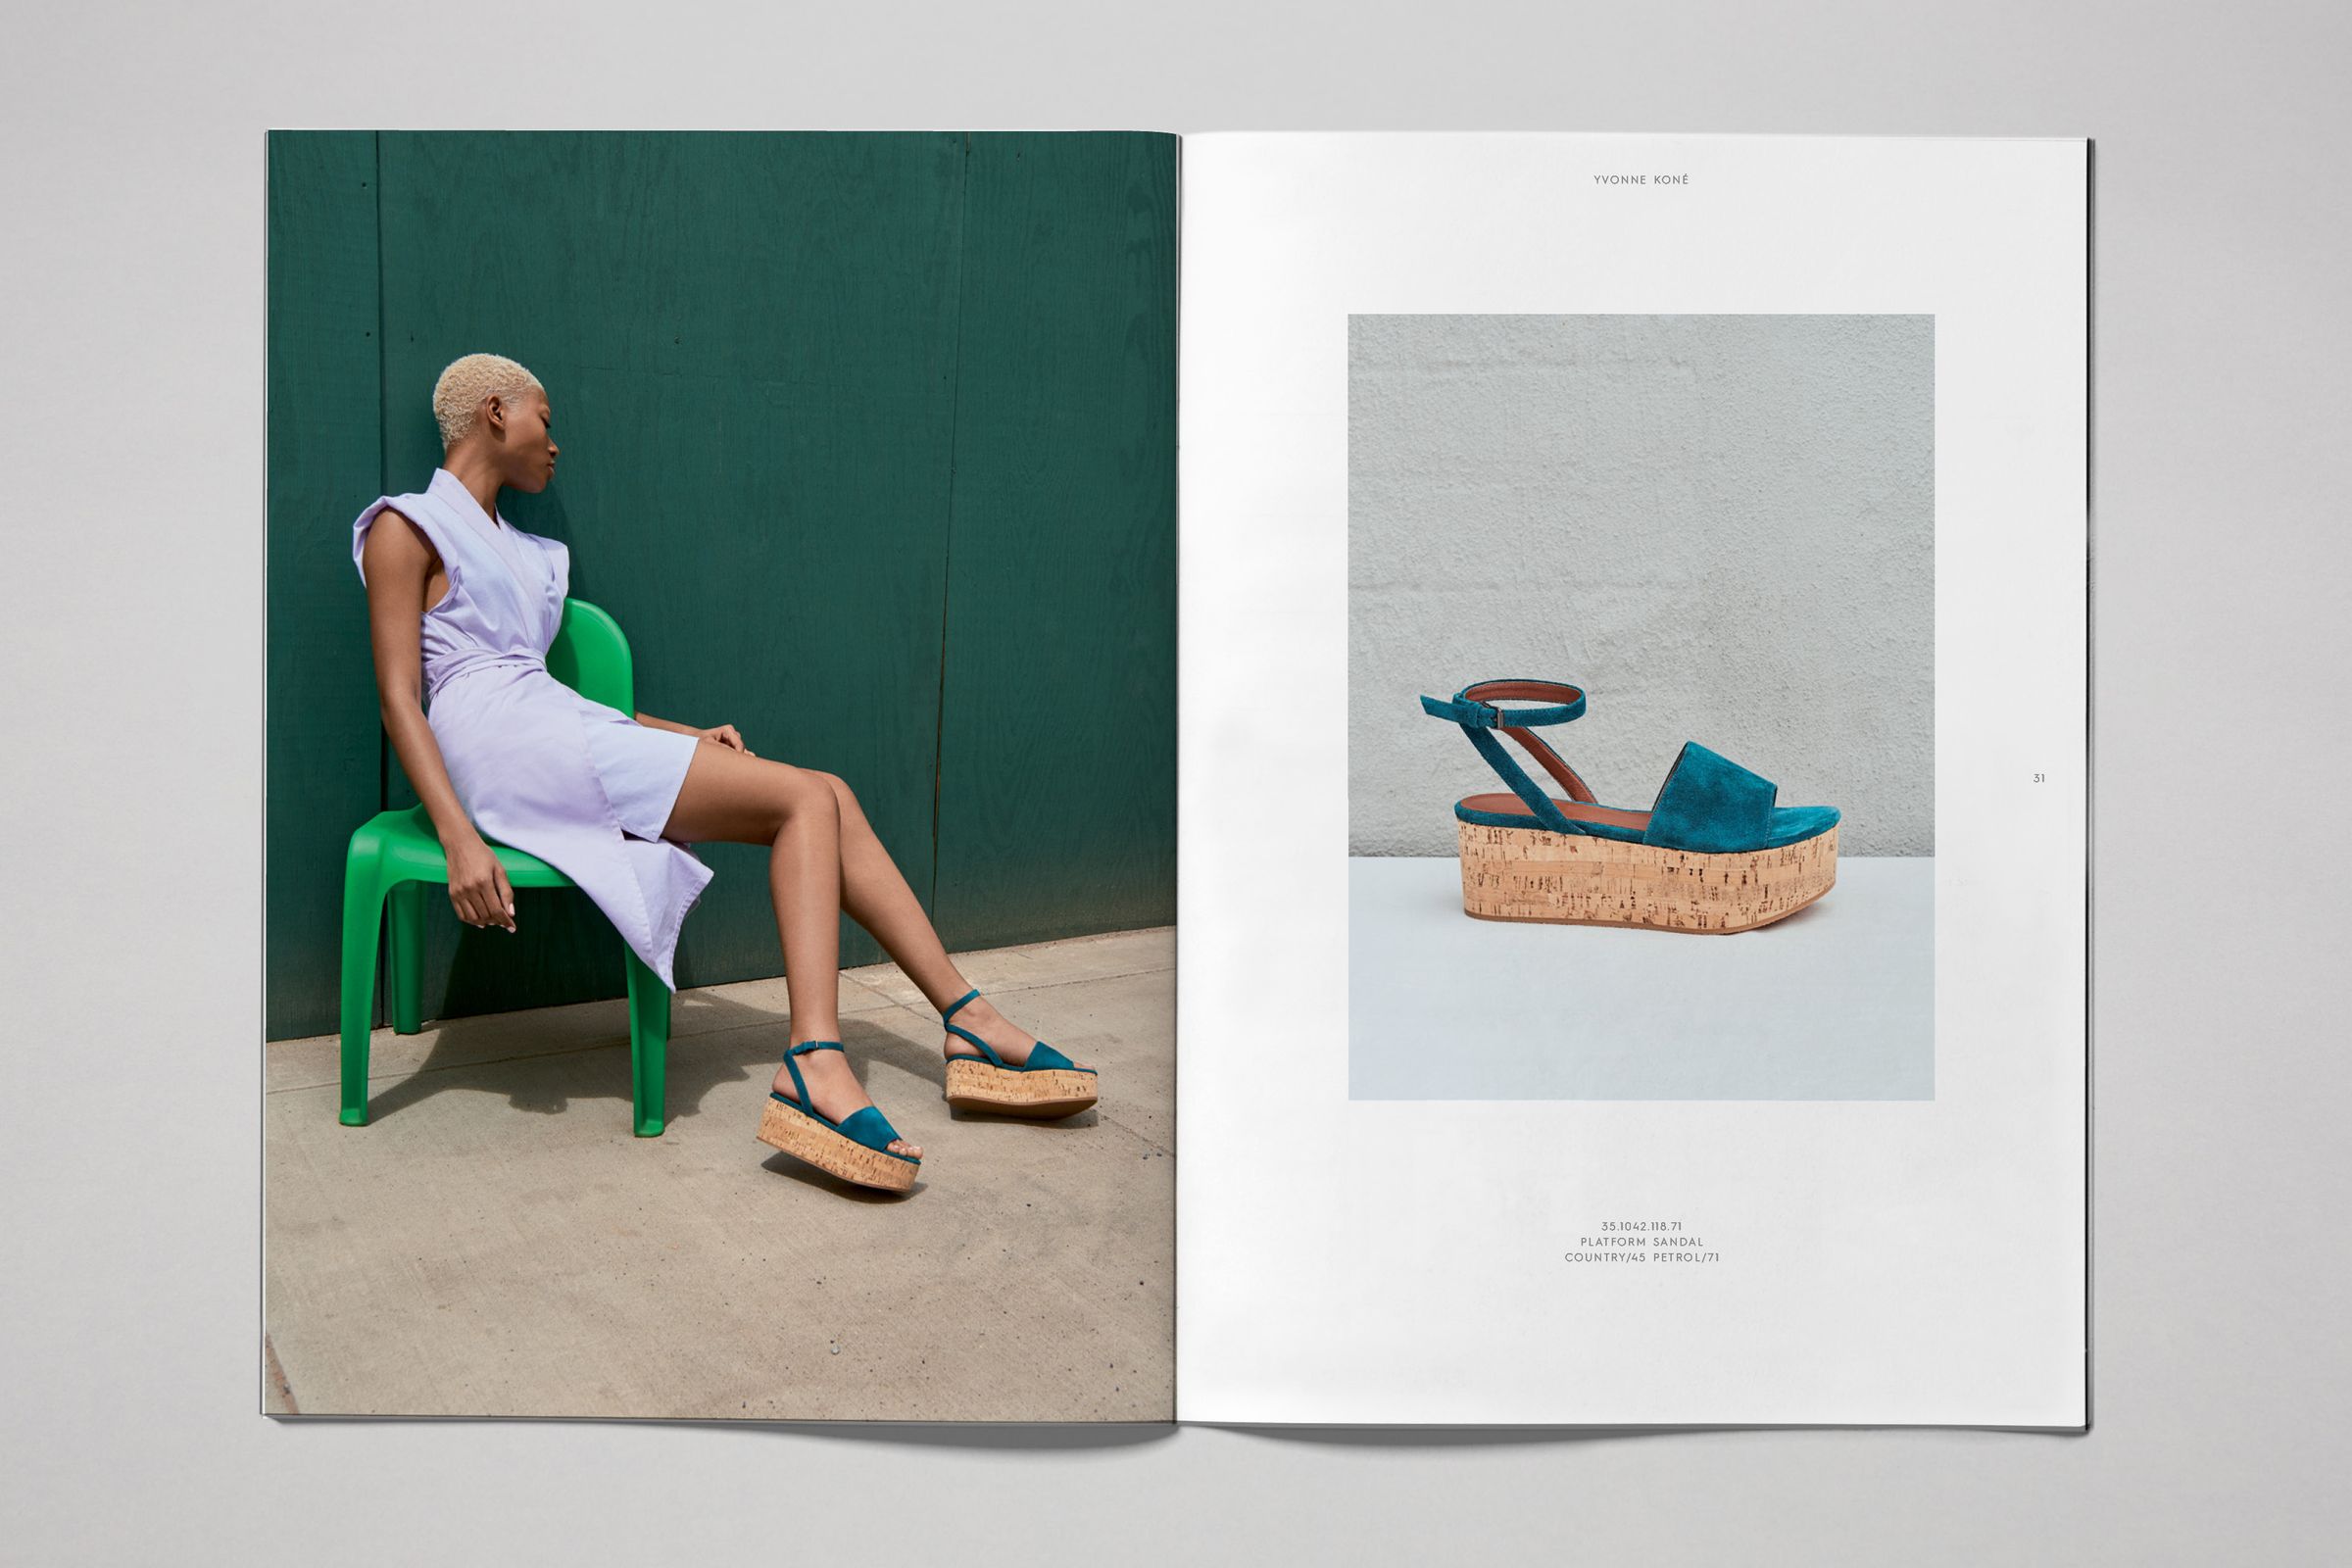 Yvonne Kone catalog layout design with platform sandals